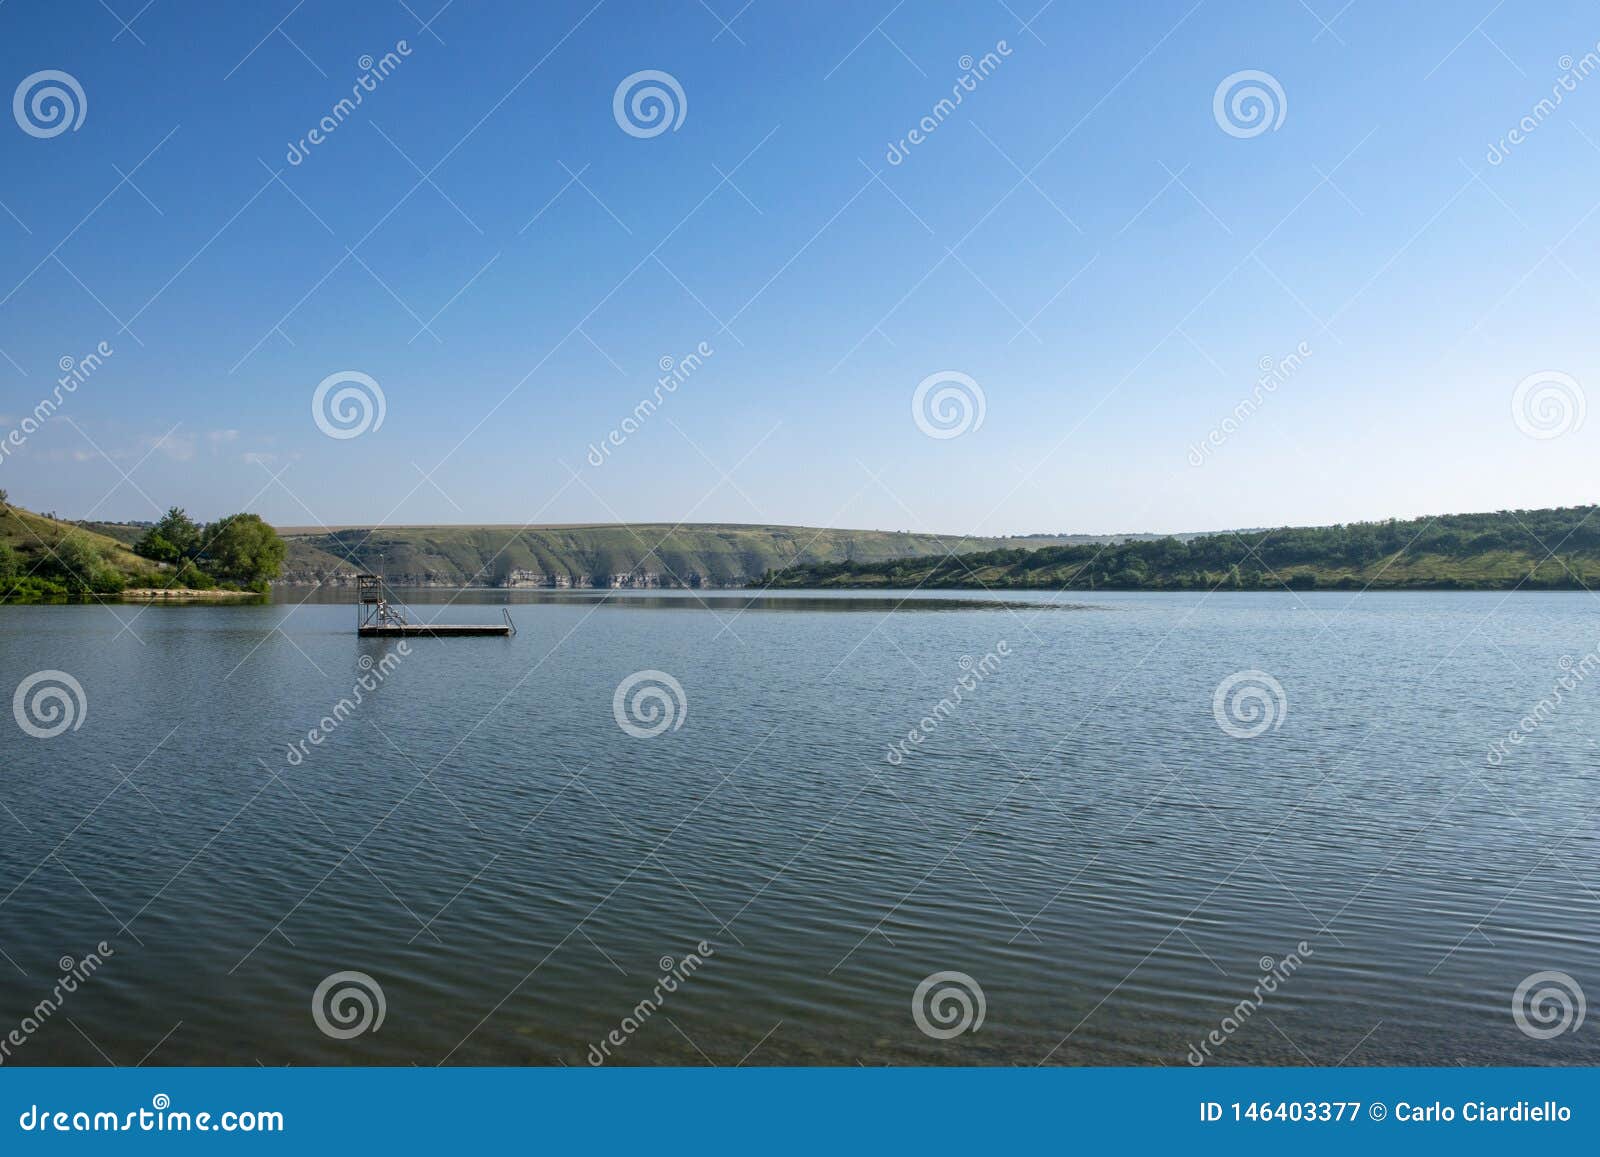 bogotÃÂ  river in carpati ukraine